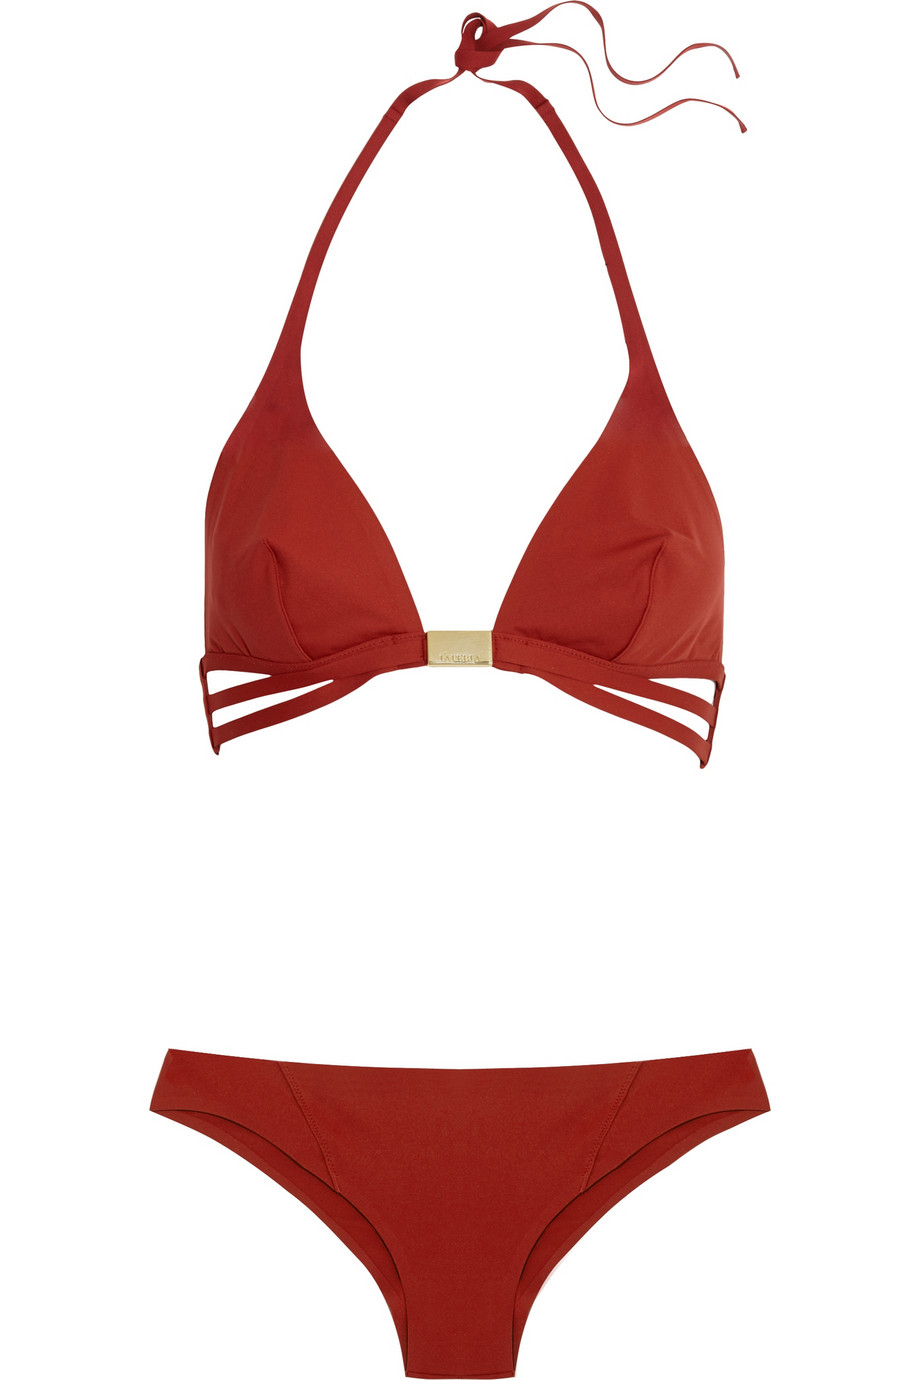 La Perla Eclipse Triangle Bikini in Burgundy (Red) - Lyst